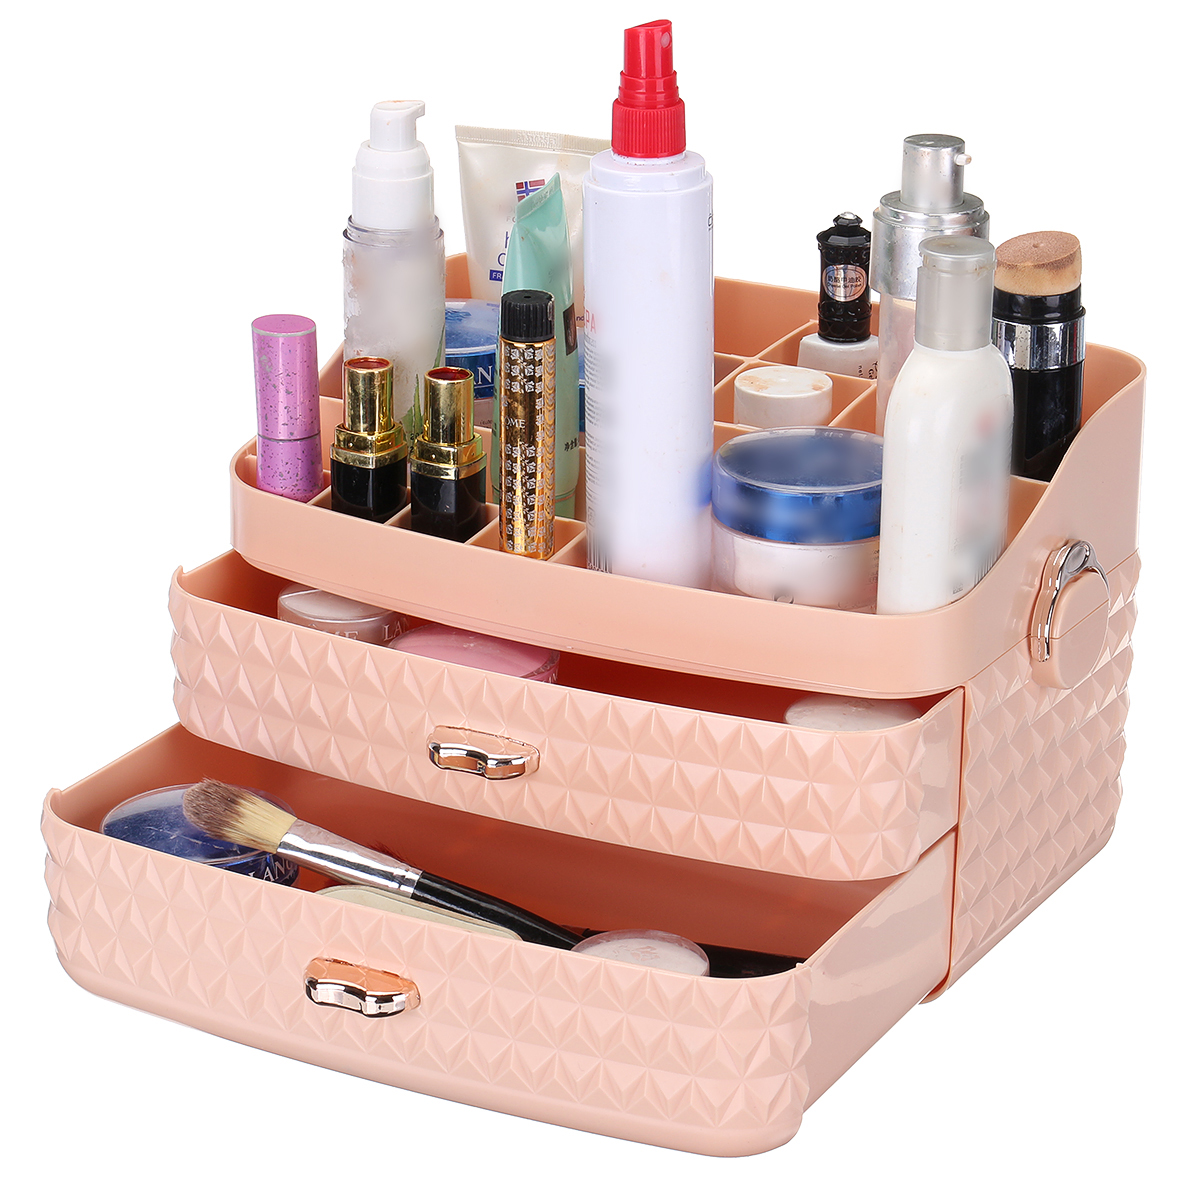 Dustproof-Cosmetic-Storage-Box-with-Drawer-Large-Capacity-Desktop-Furnishings-Organizer-Home-Desk-Su-1777438-29